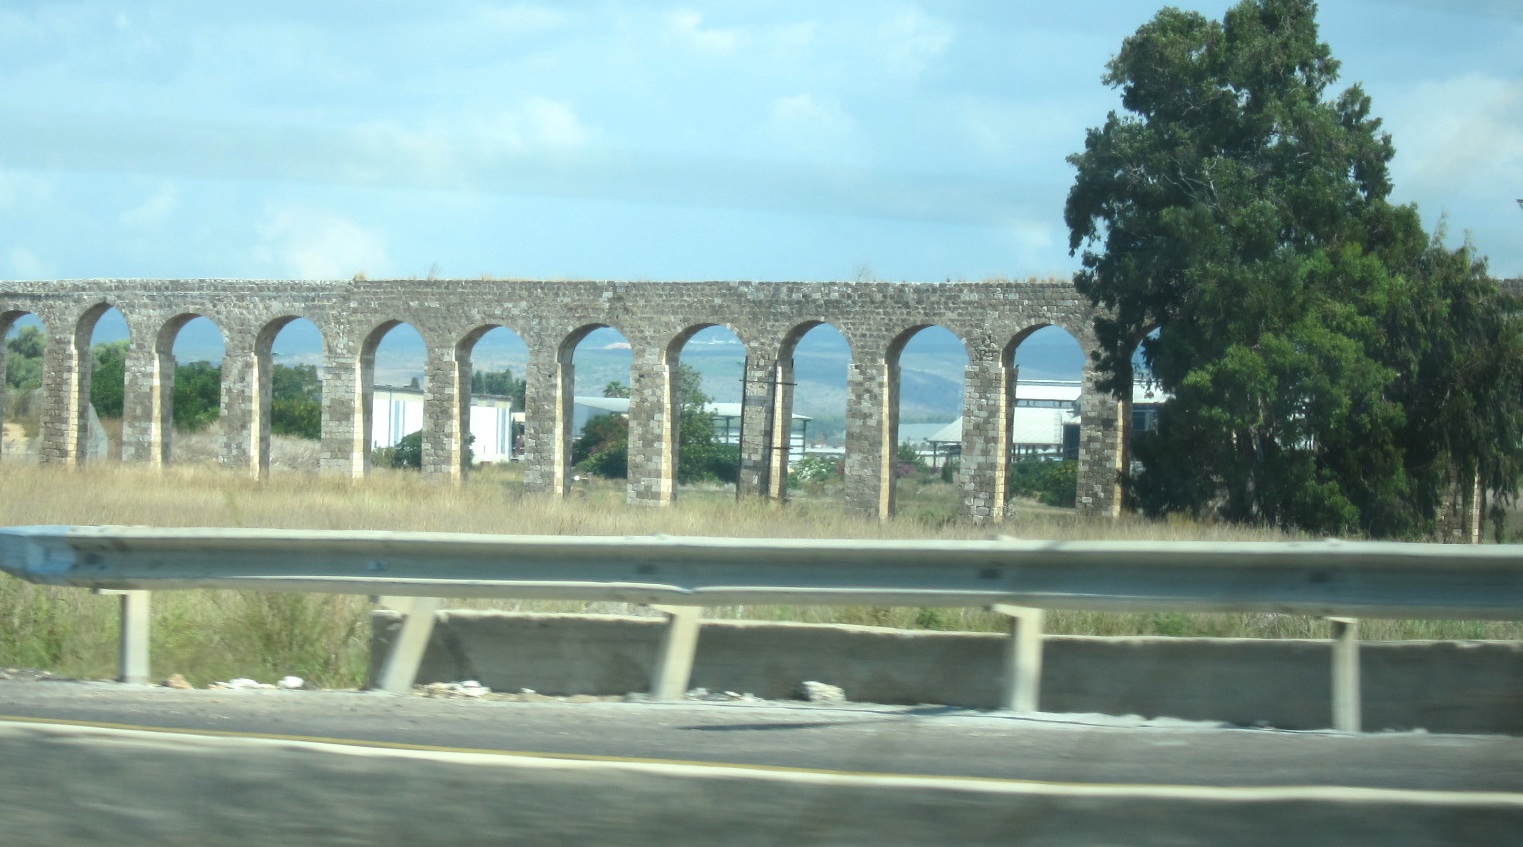 Roman aqueduct runs along the highway